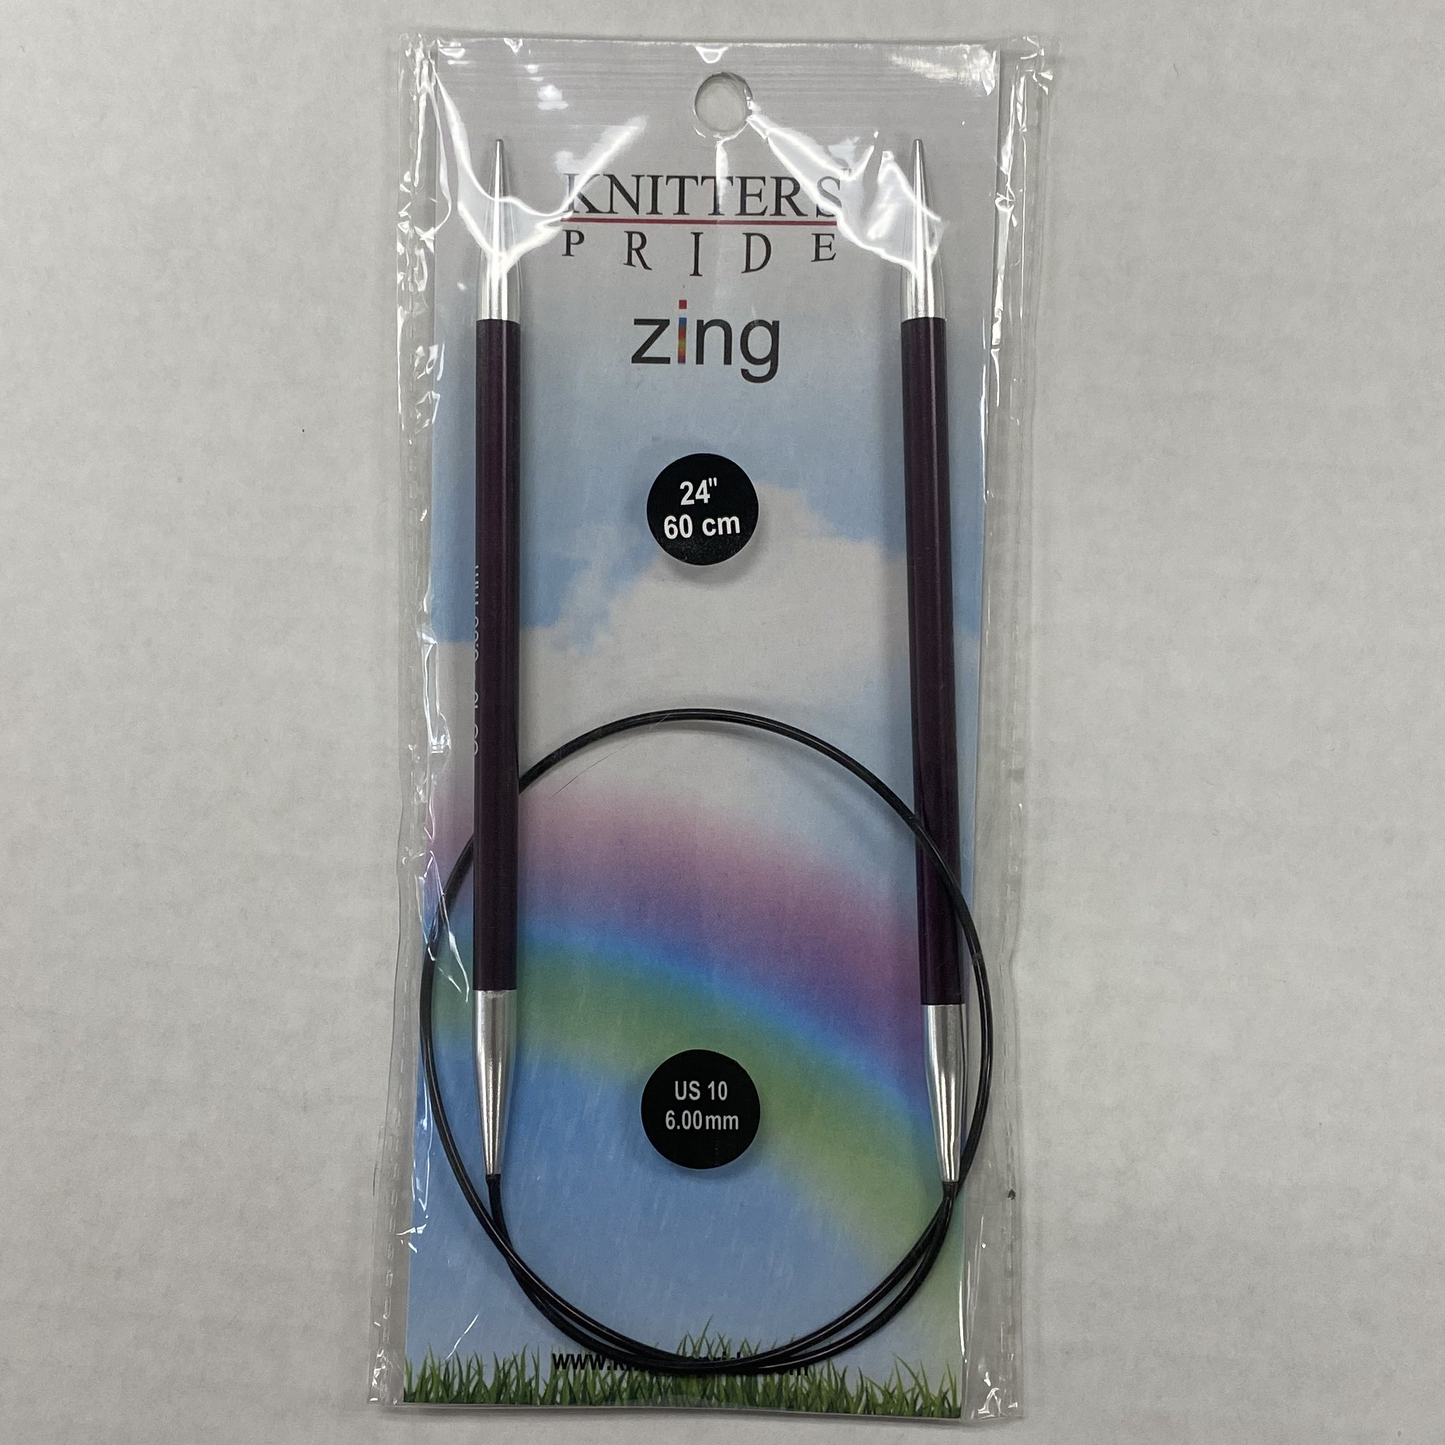 Knitter's Pride - Zing - US 10 / 6.00mm Fixed Circular Needles